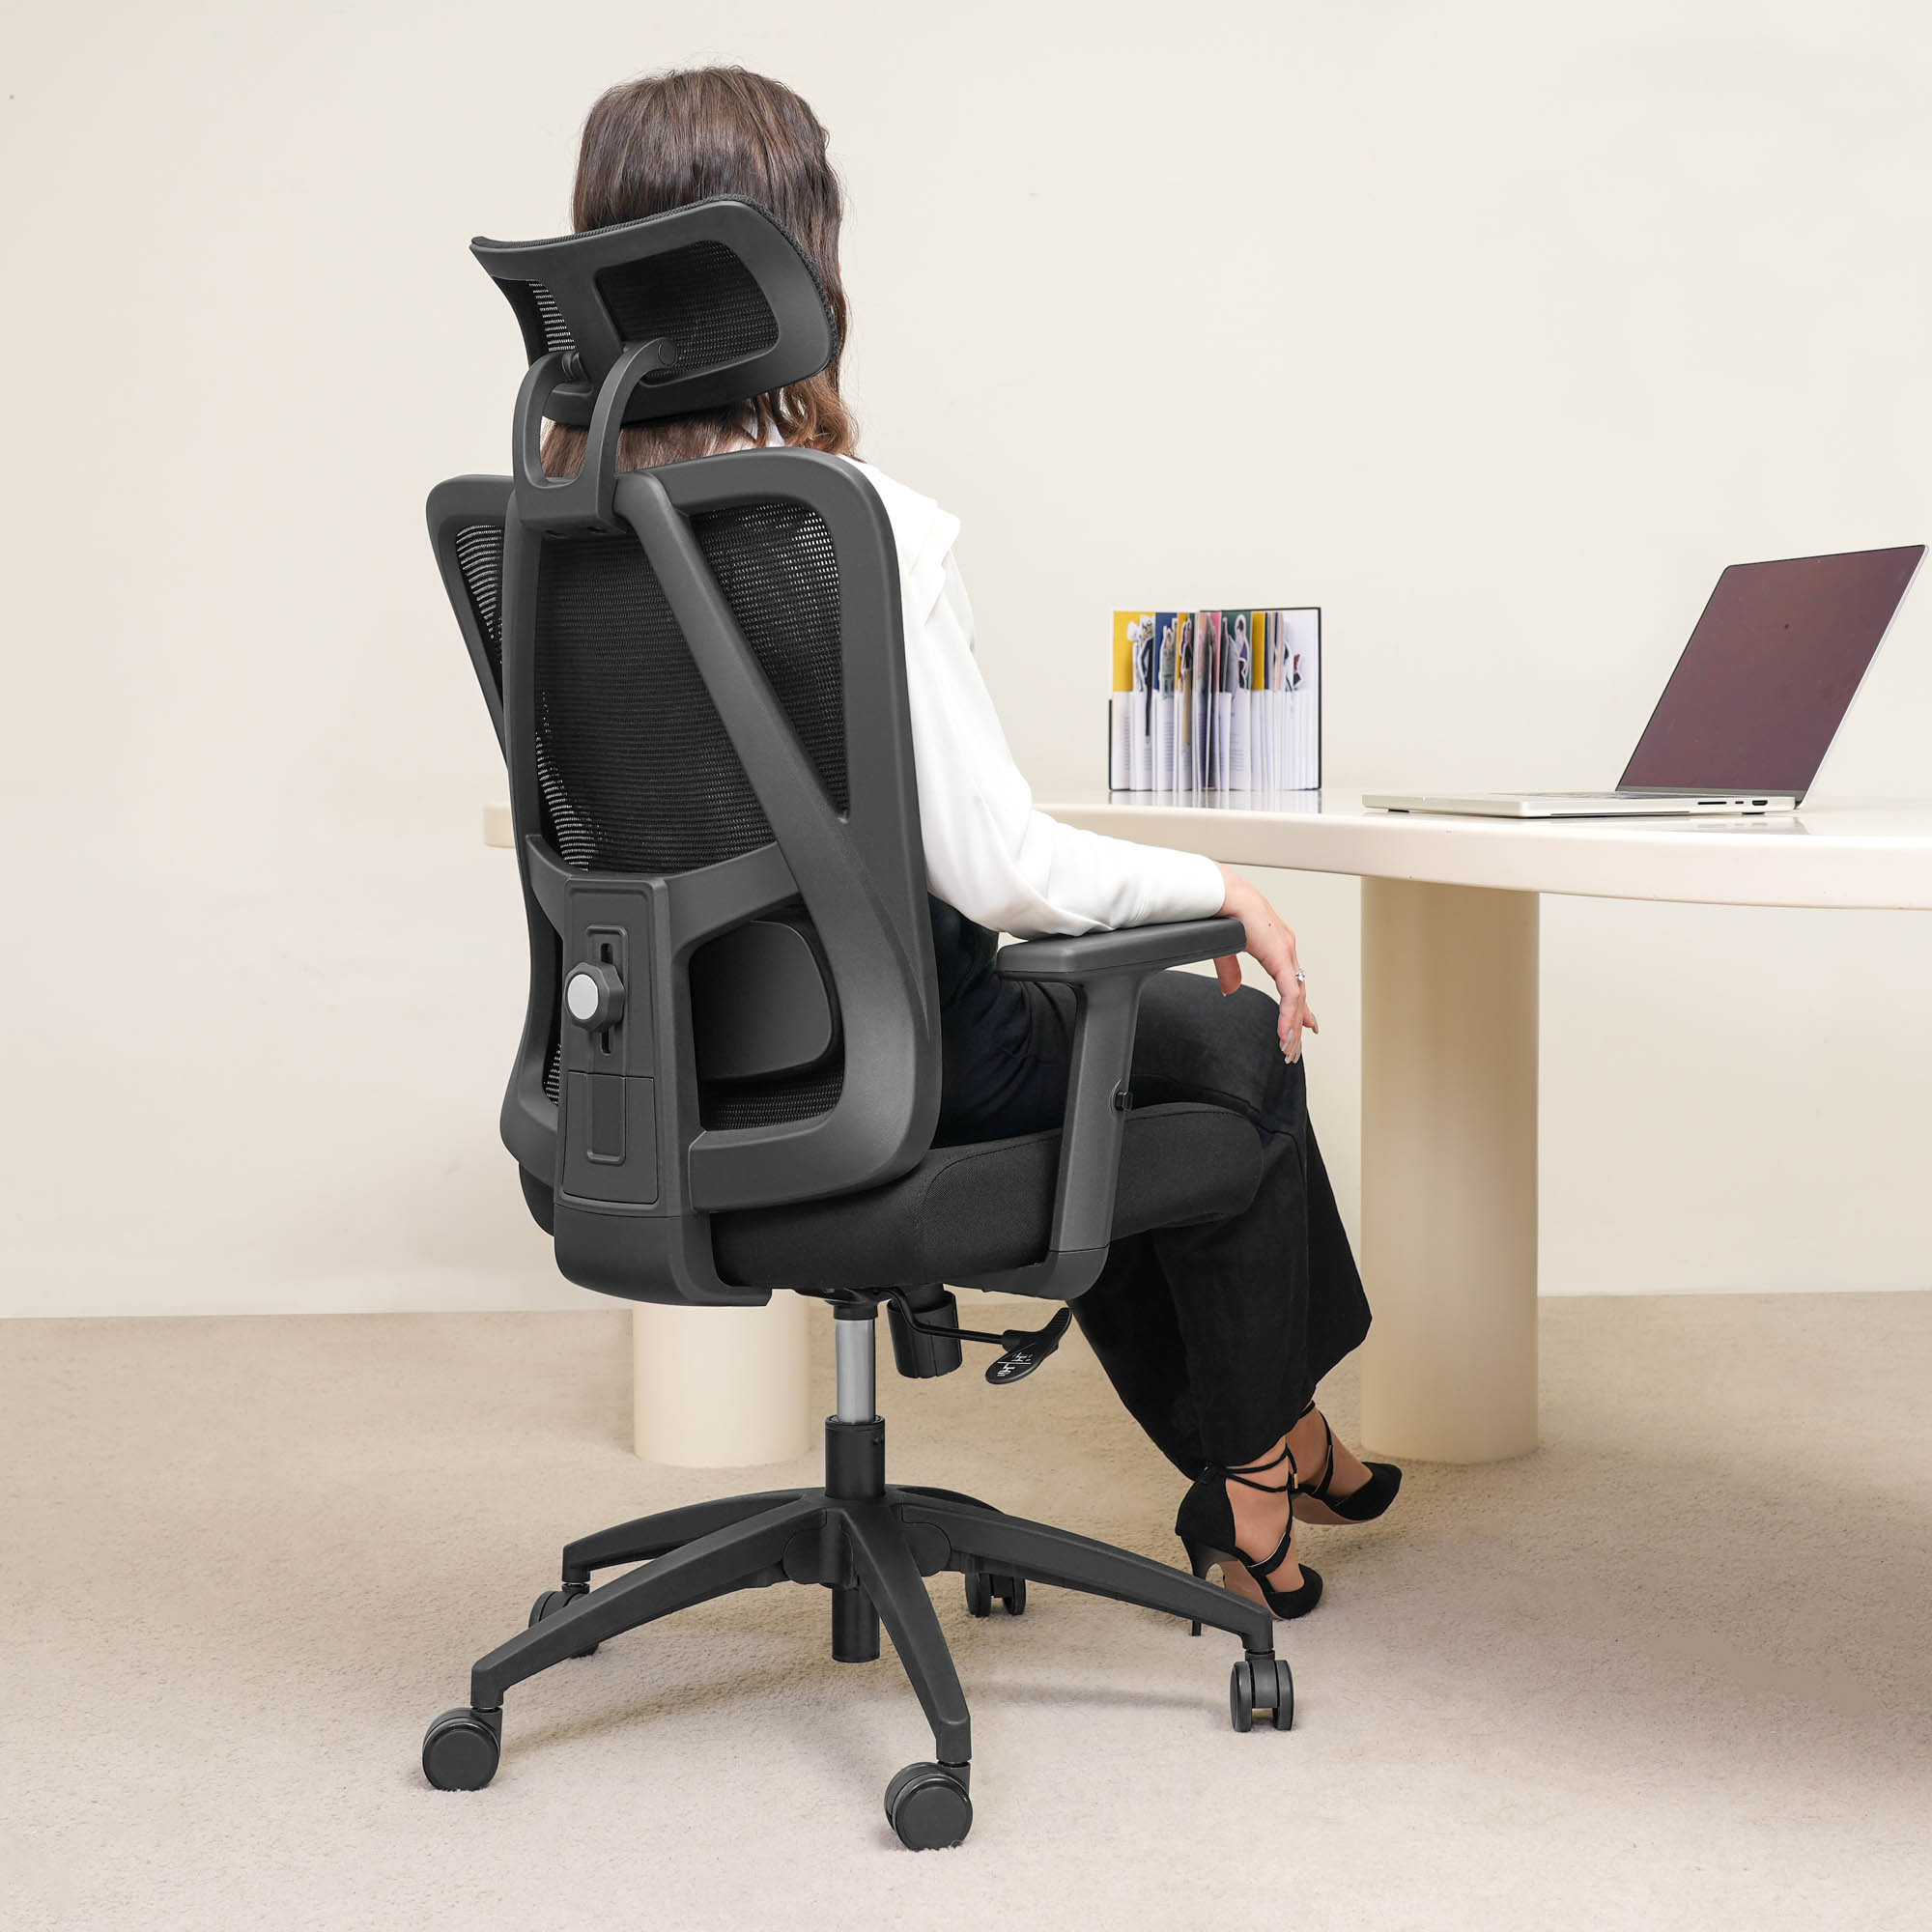 Lumbar Support Sitting, Office Chair Cushion